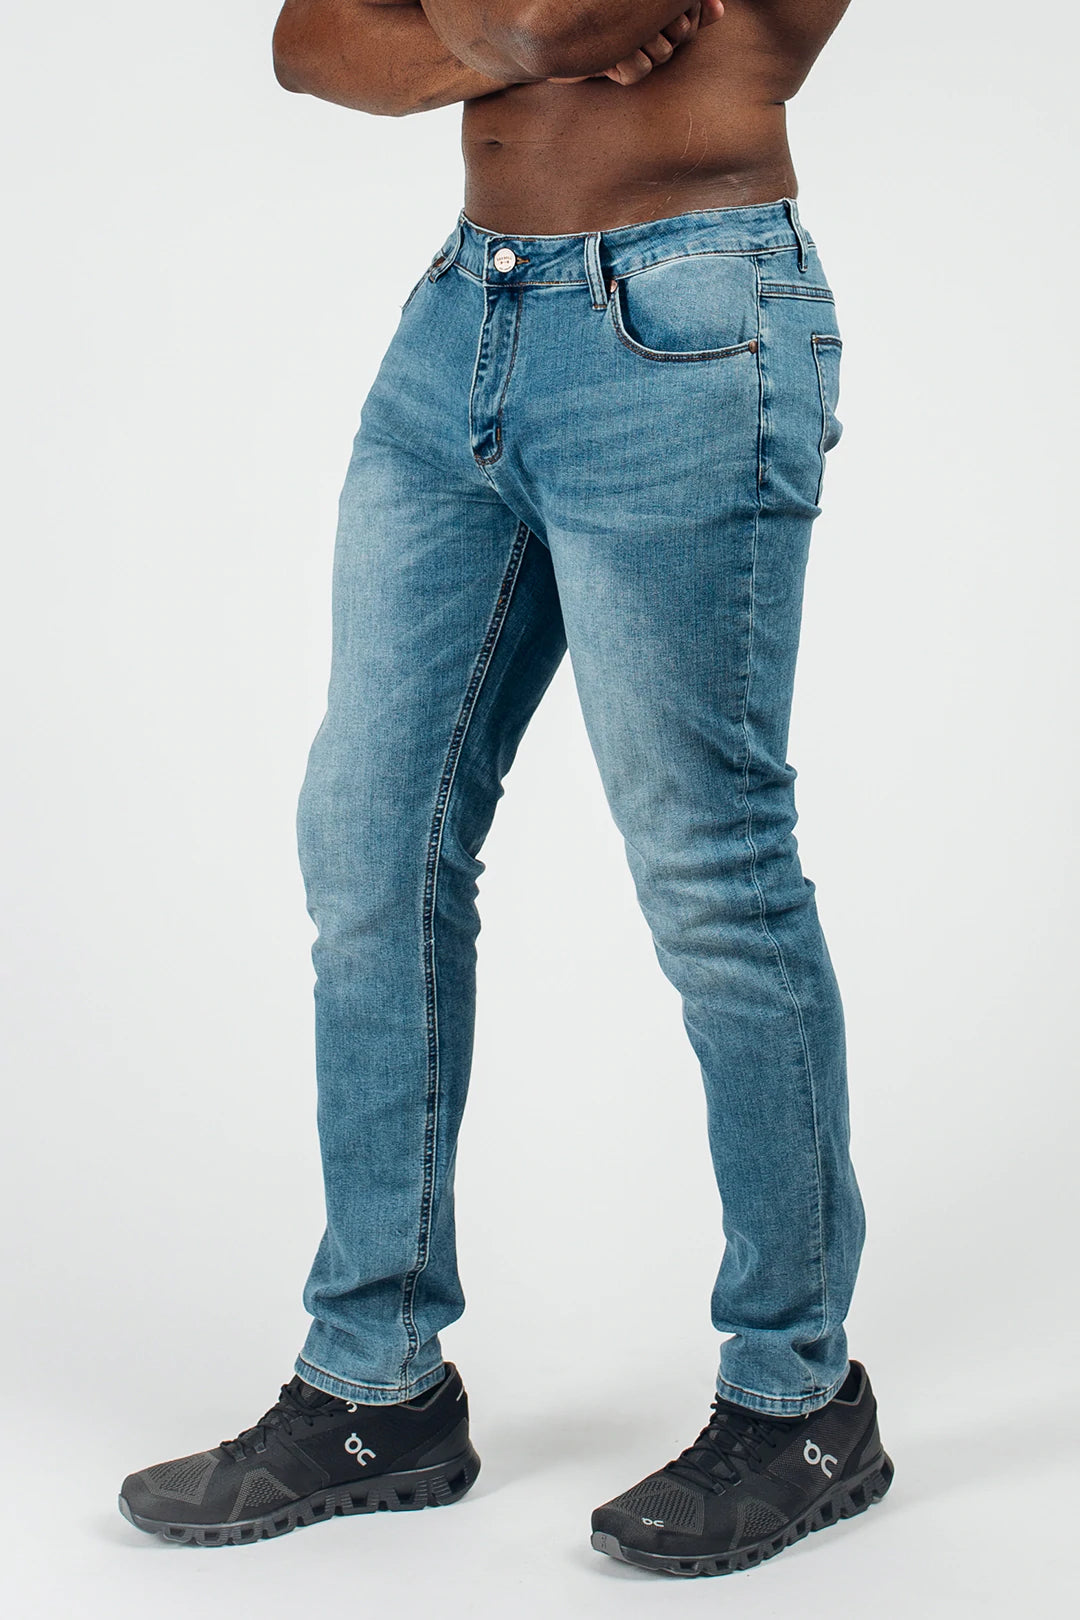 Slim Athletic Jeans – Apparel